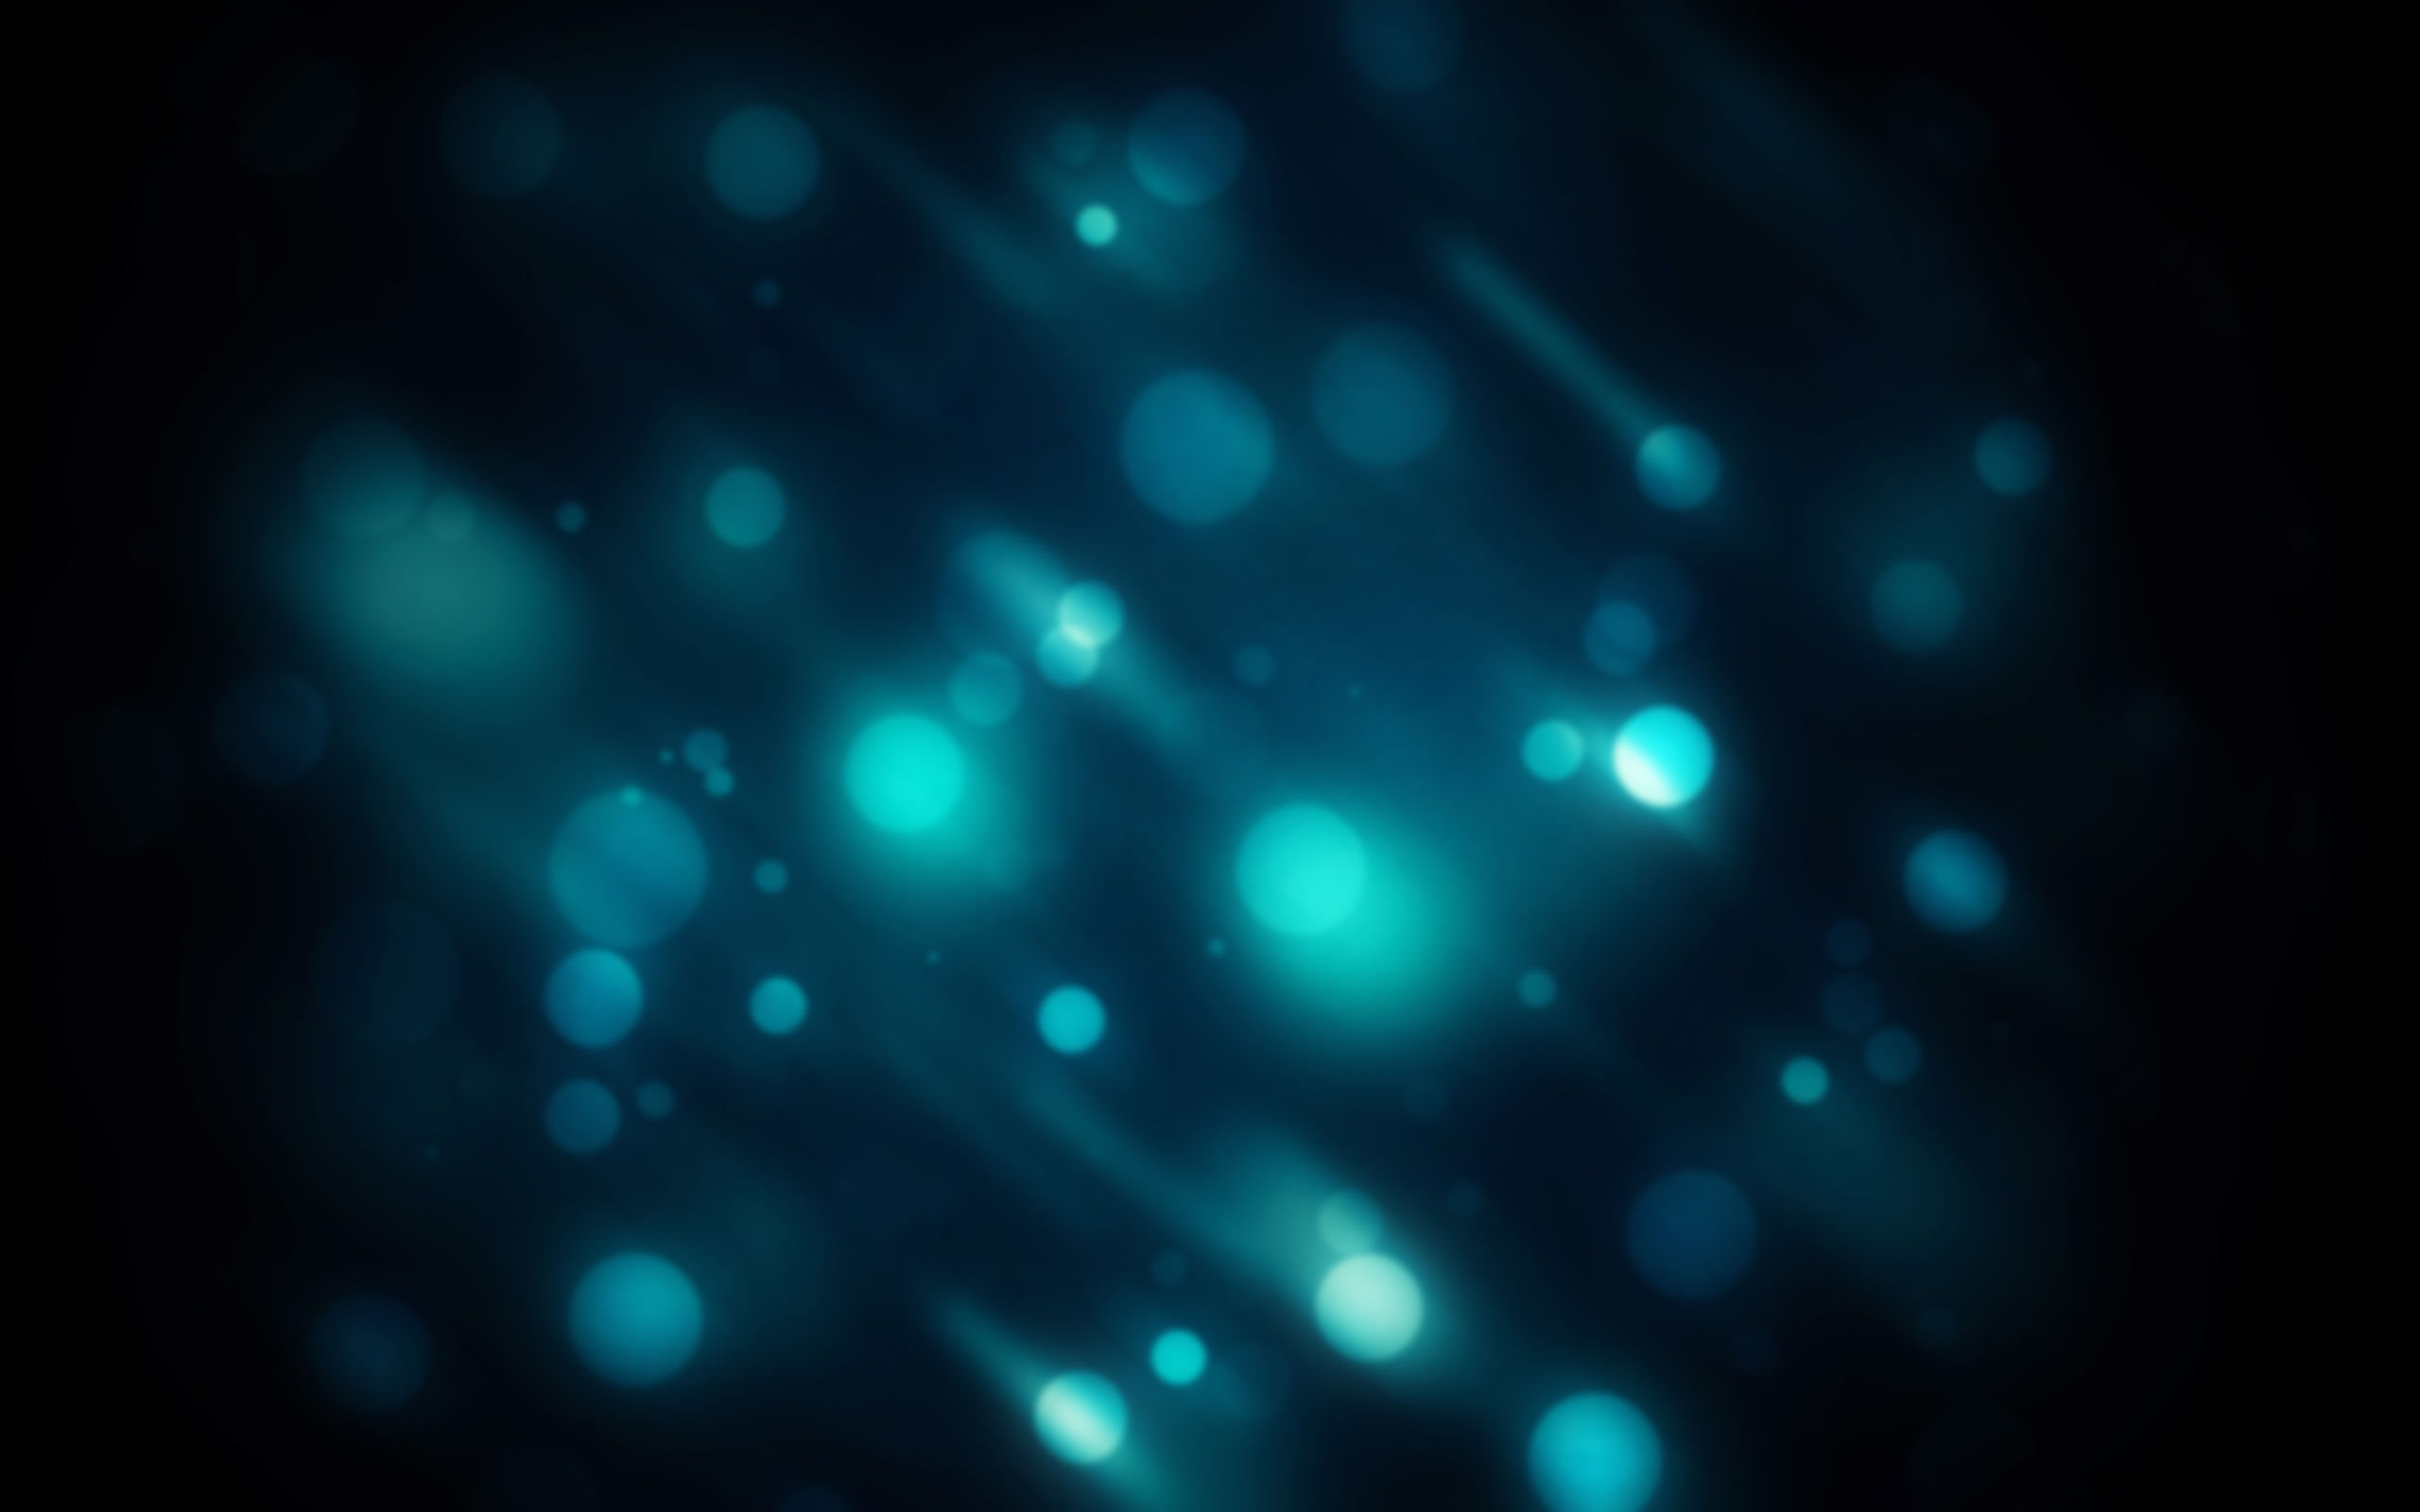 Turquoise Puter Wallpaper Desktop Background Id